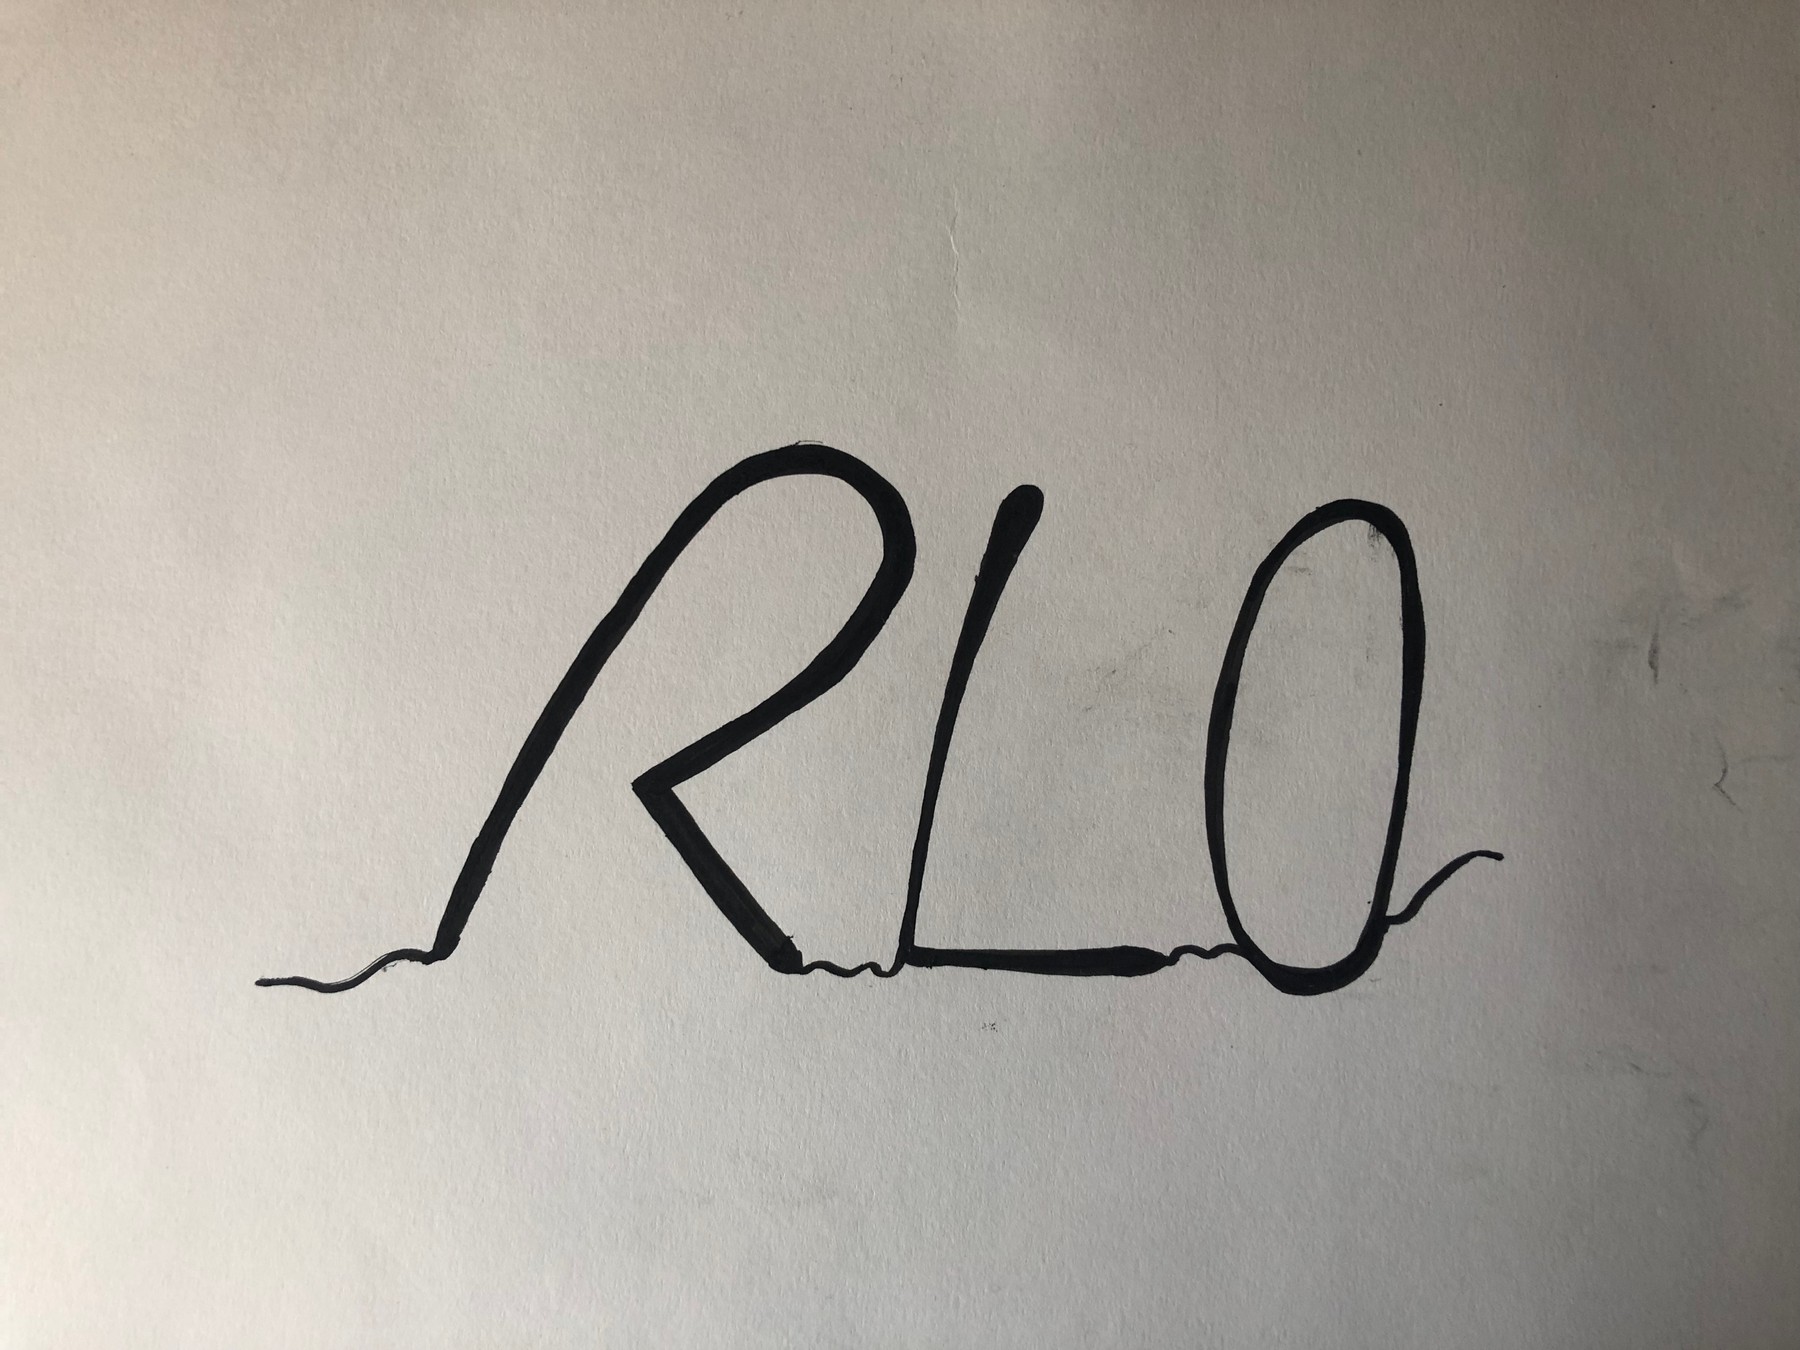 RLO#2.jpg